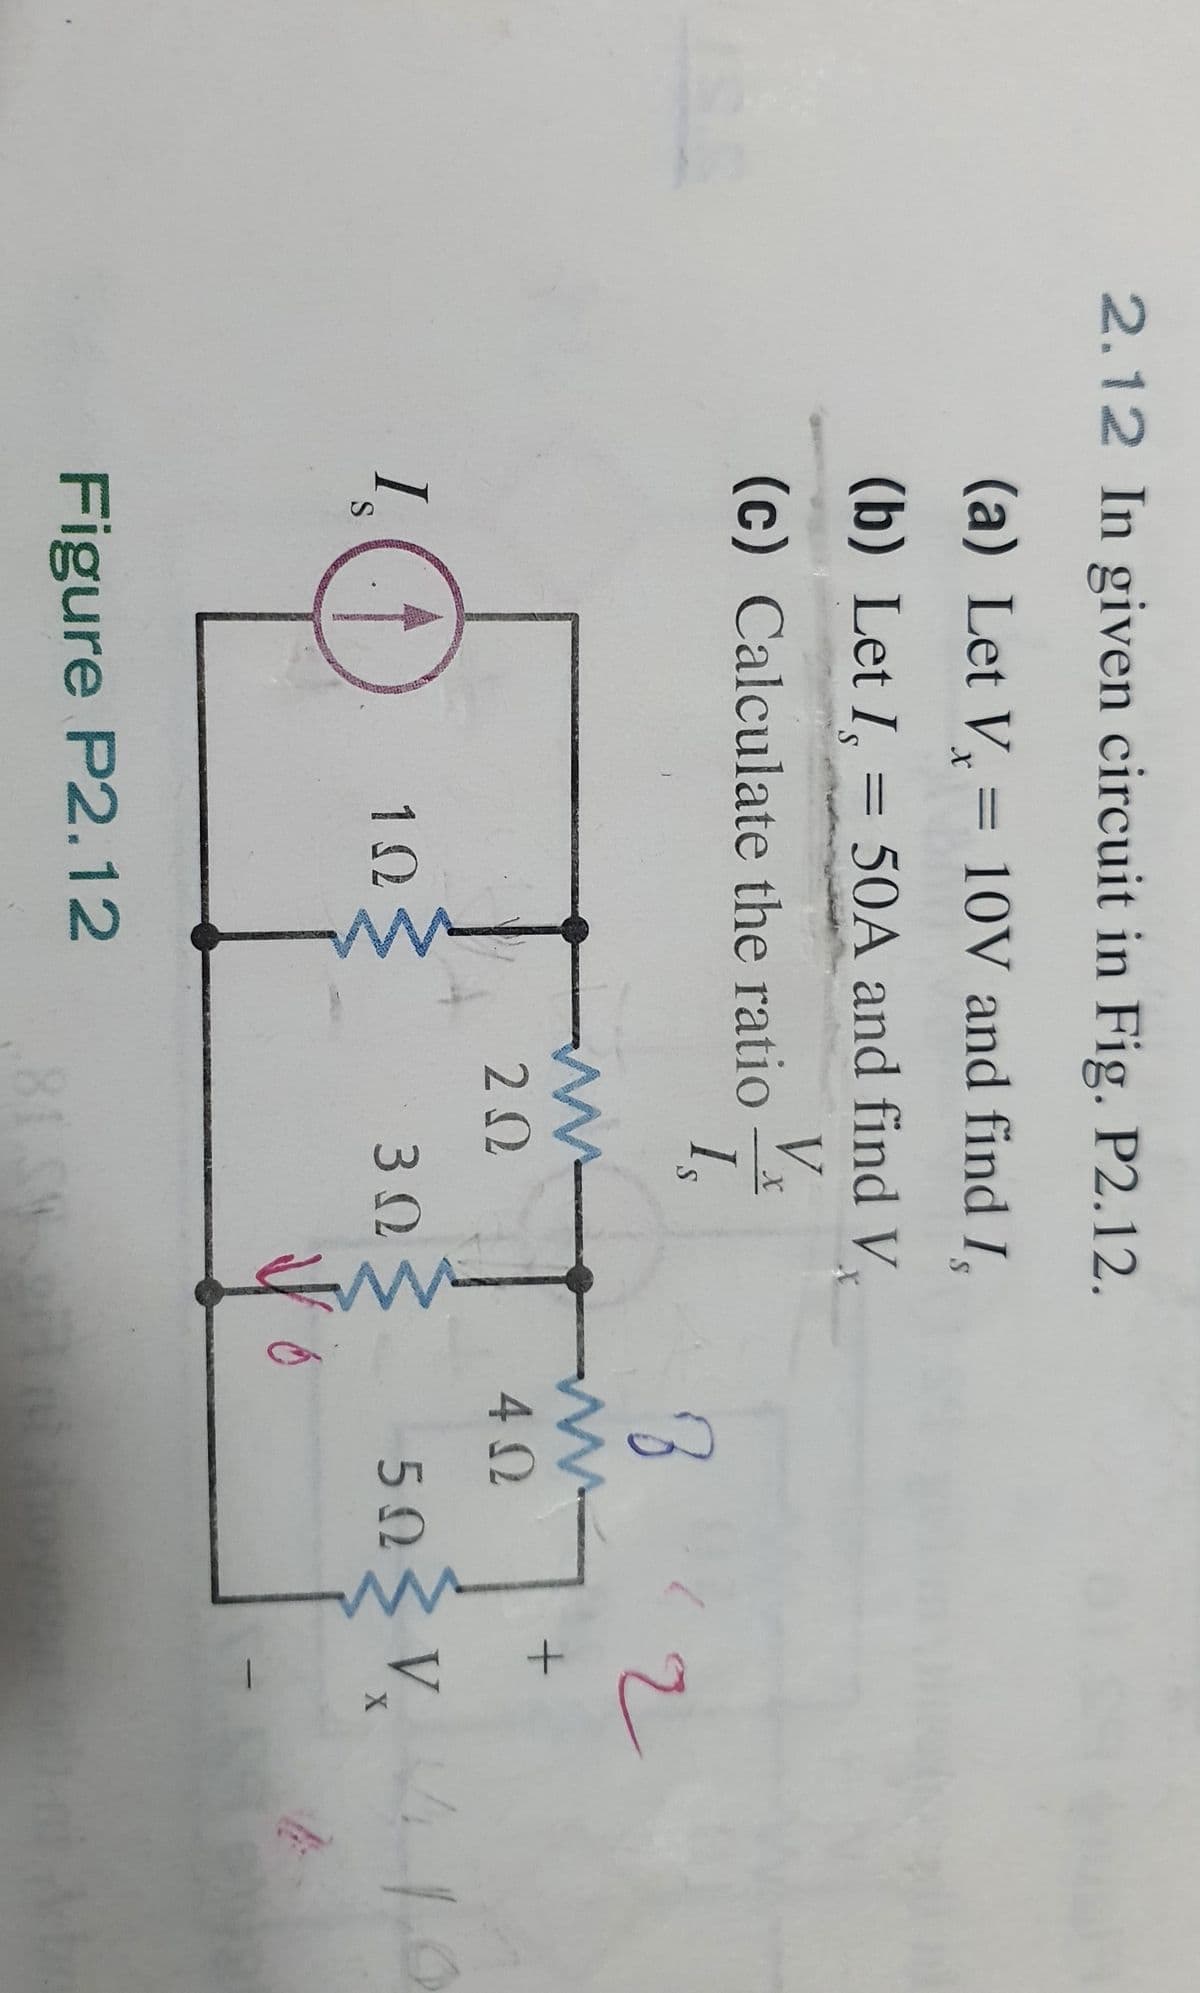 2.12 In given circuit in Fig. P2.12.
(a) Let V, = 10V and find I,
(b) Let I, = 50A and find V
V
(c) Calculate the ratio
I,
ww
20
40
I.
3Ω
503 V O
V.10
10
Figure P2.12
81.S
